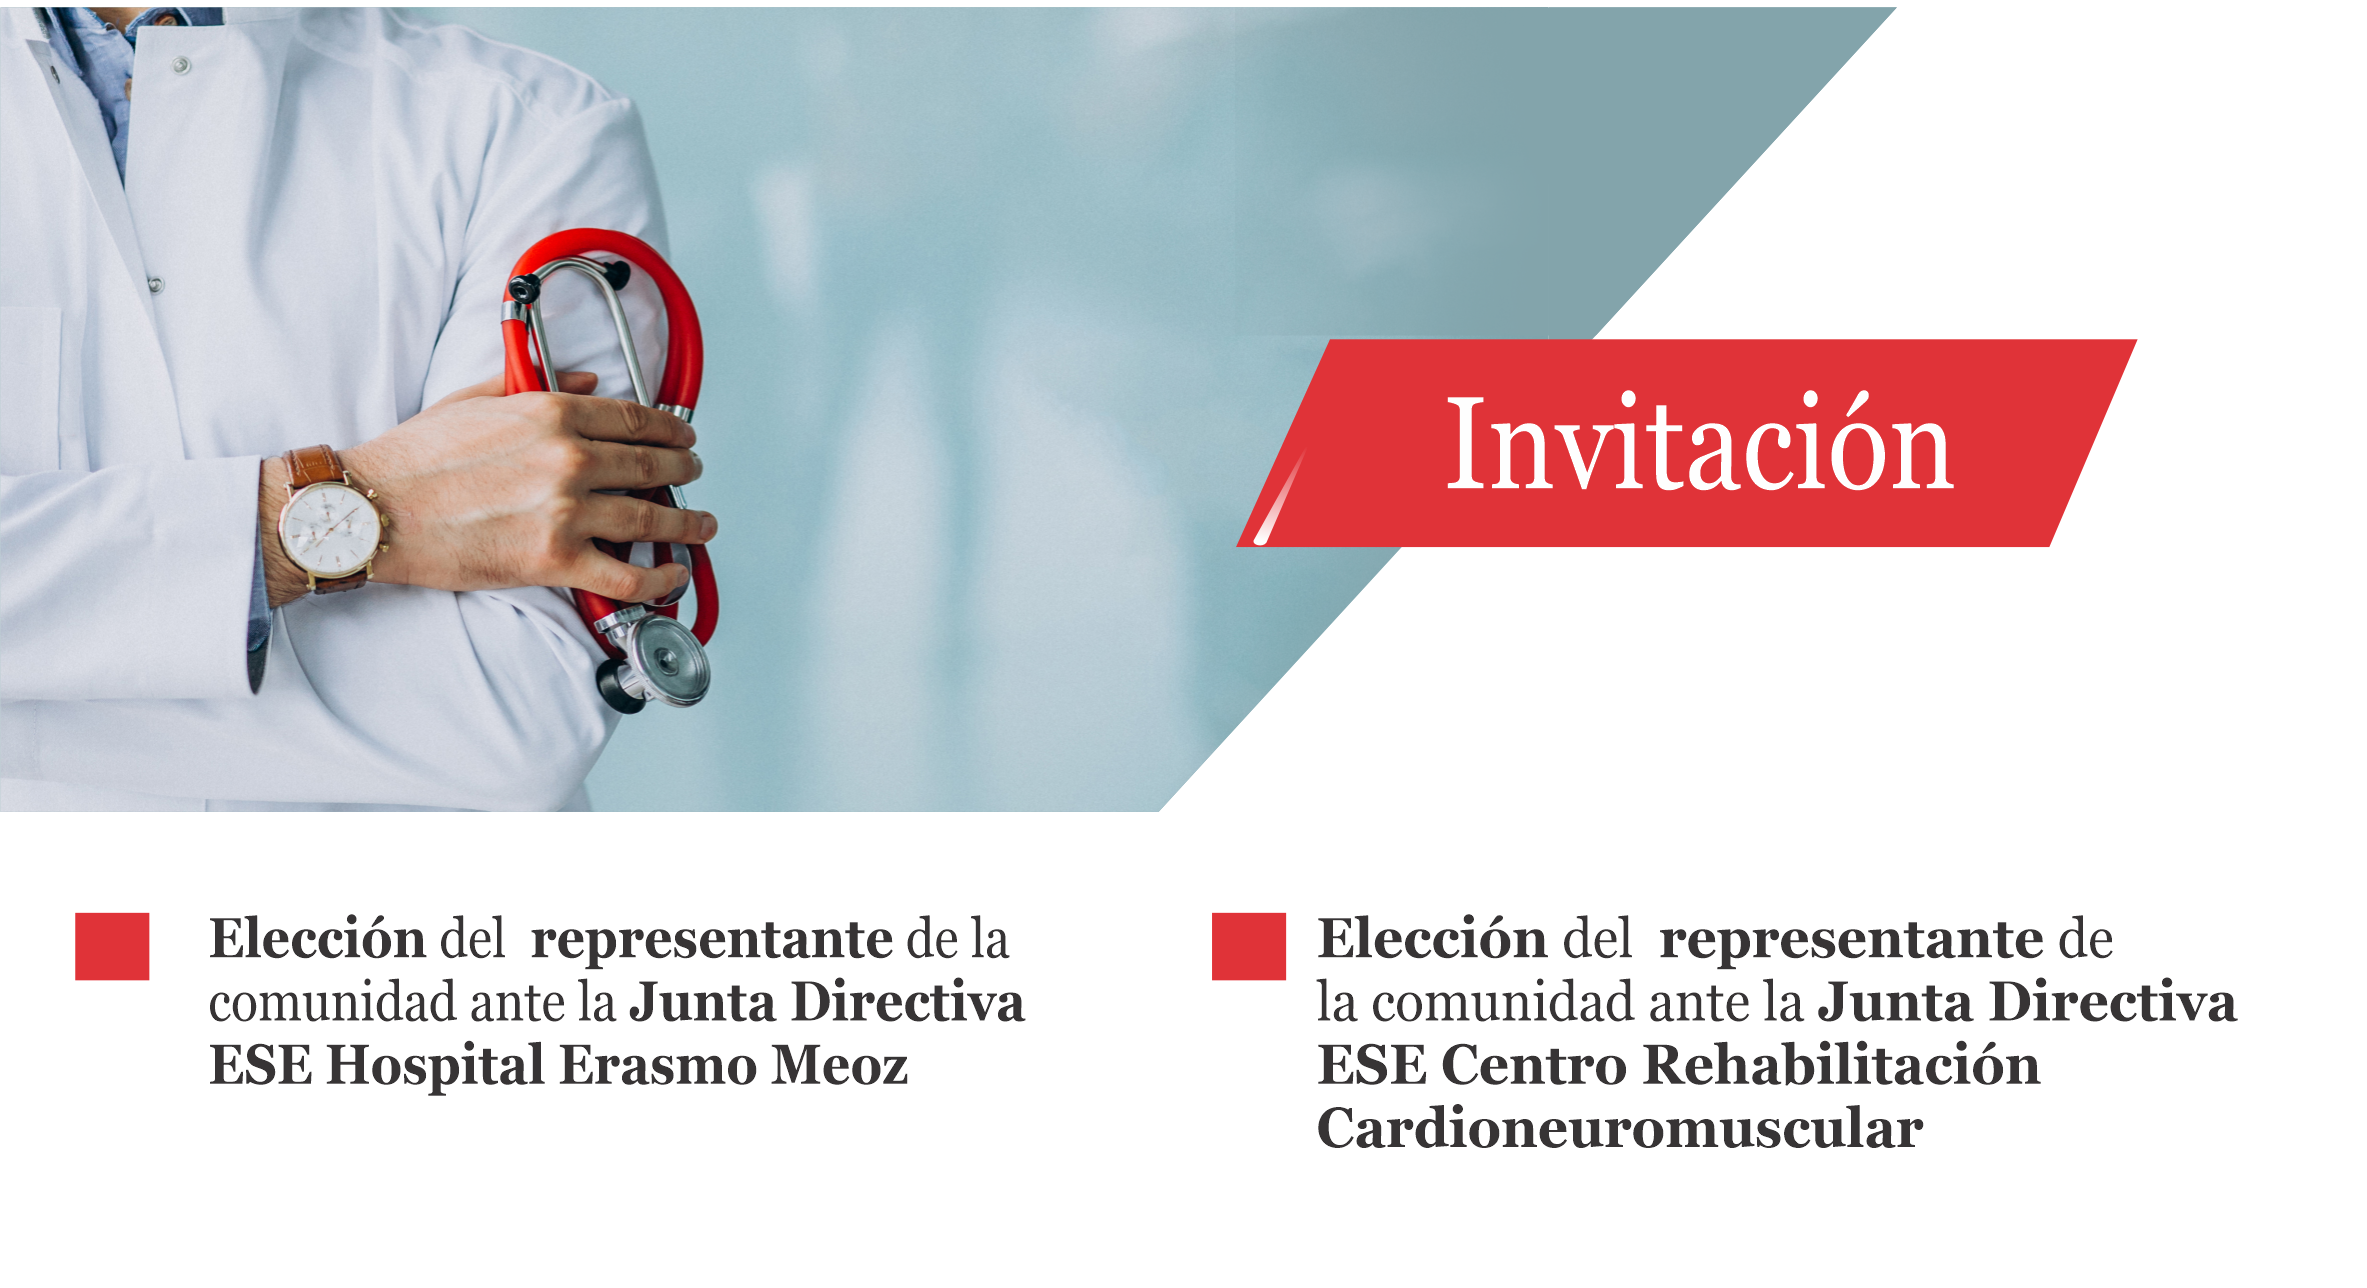 Eleccin Juntas Directivas ESE Hospital Erasmo Meoz y ESE Centro de Rehabilitacin Cardioneuromuscular